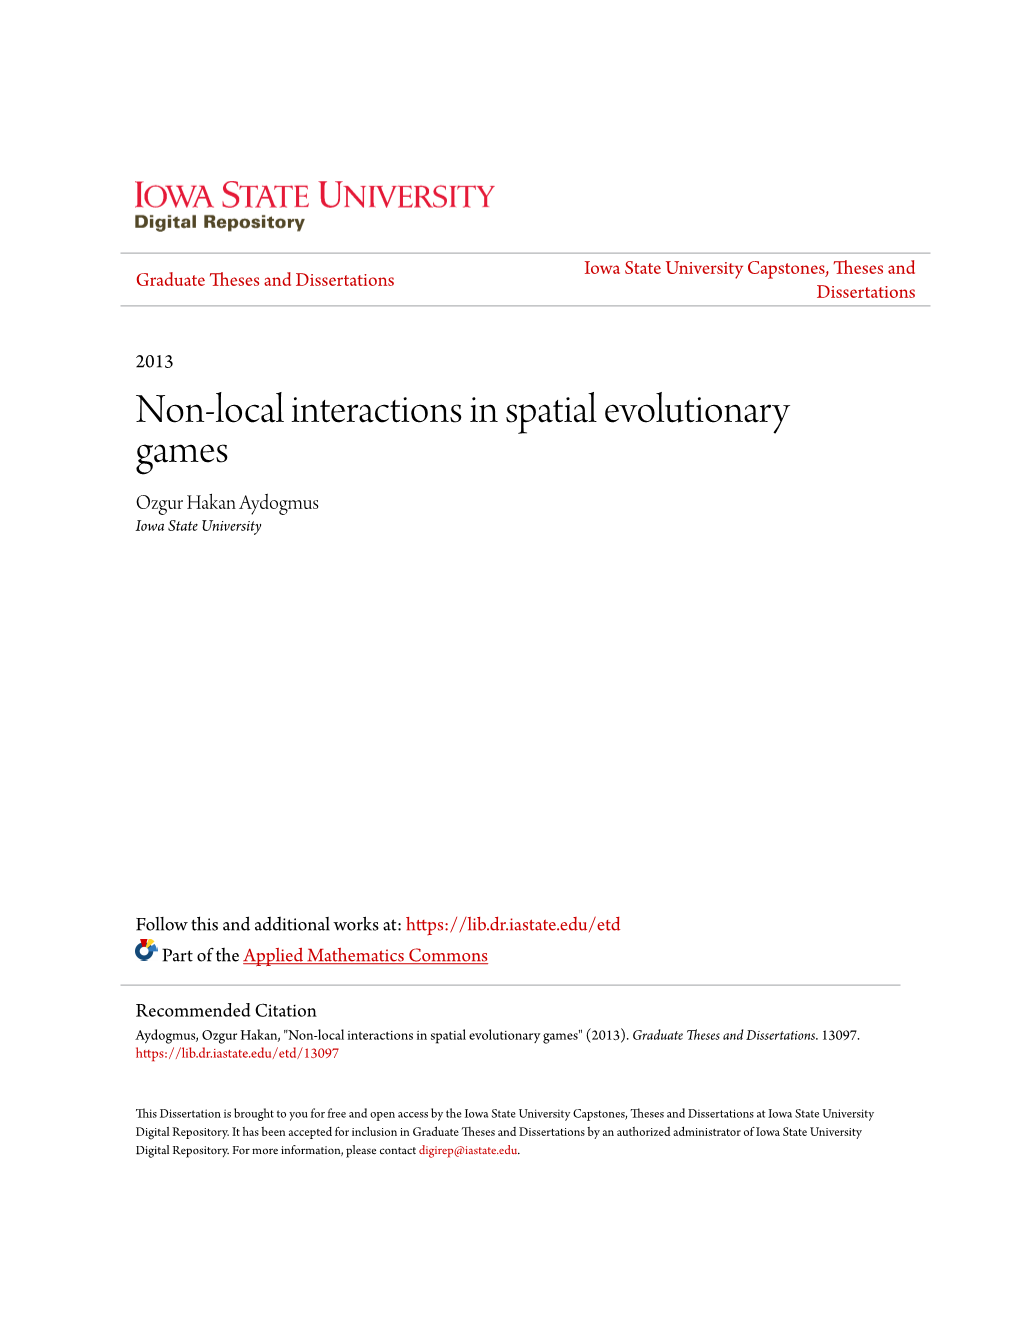 Non-Local Interactions in Spatial Evolutionary Games Ozgur Hakan Aydogmus Iowa State University